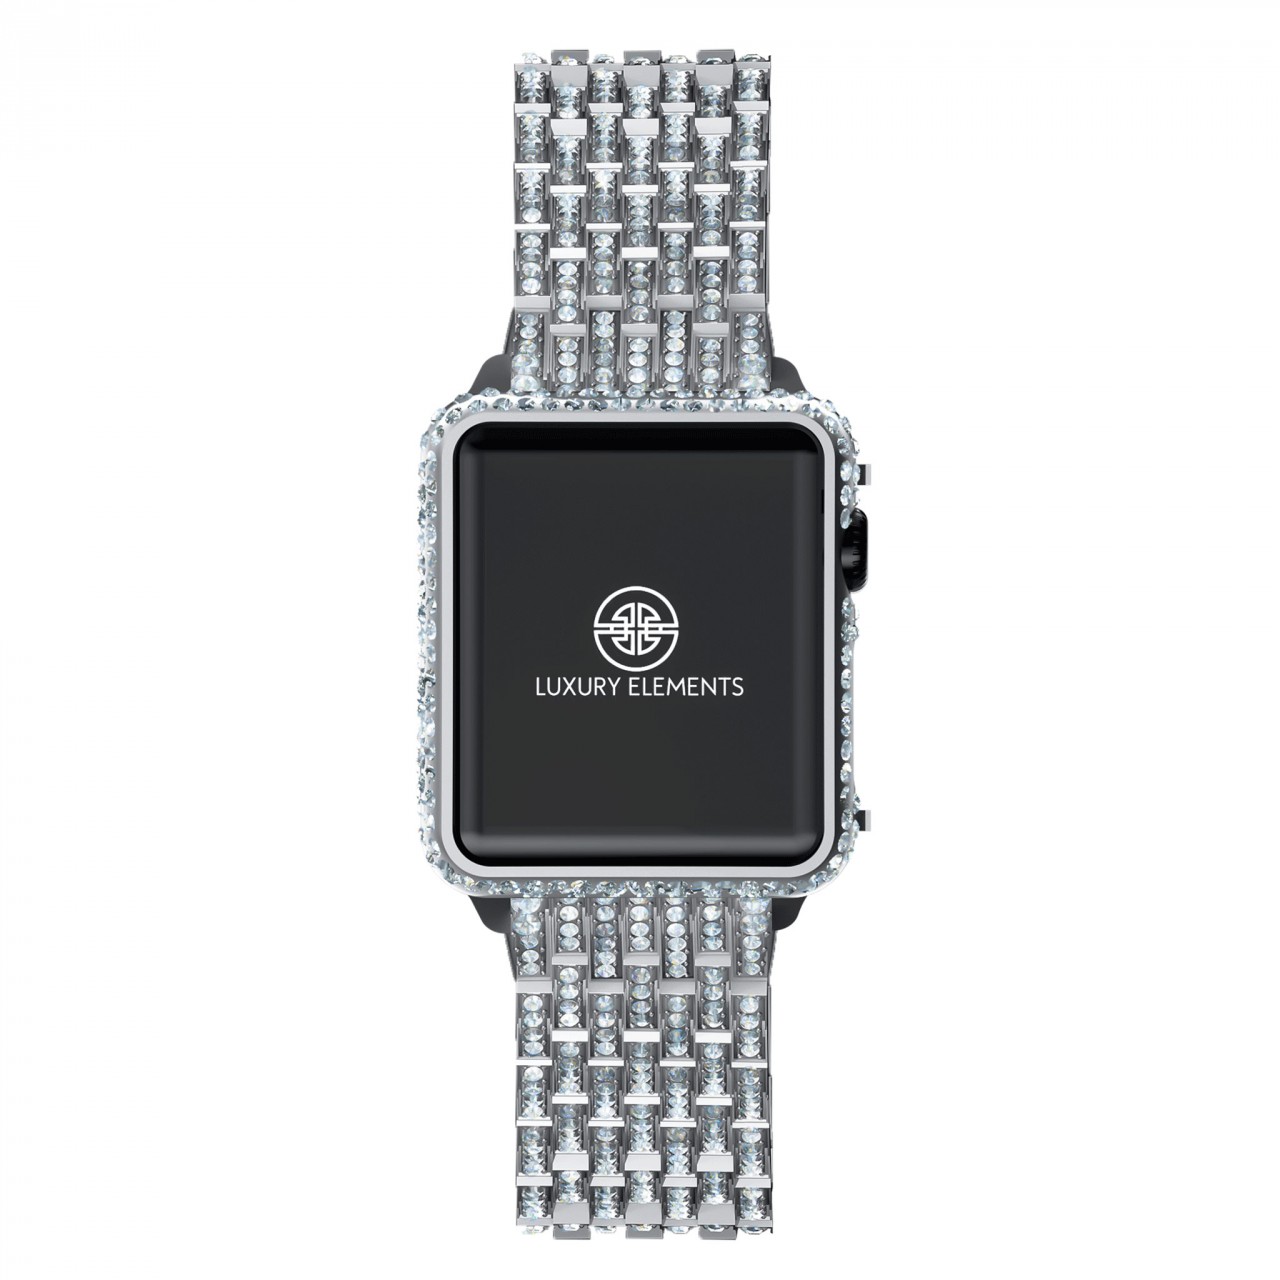 Apple Watch Diamond Platin Edition